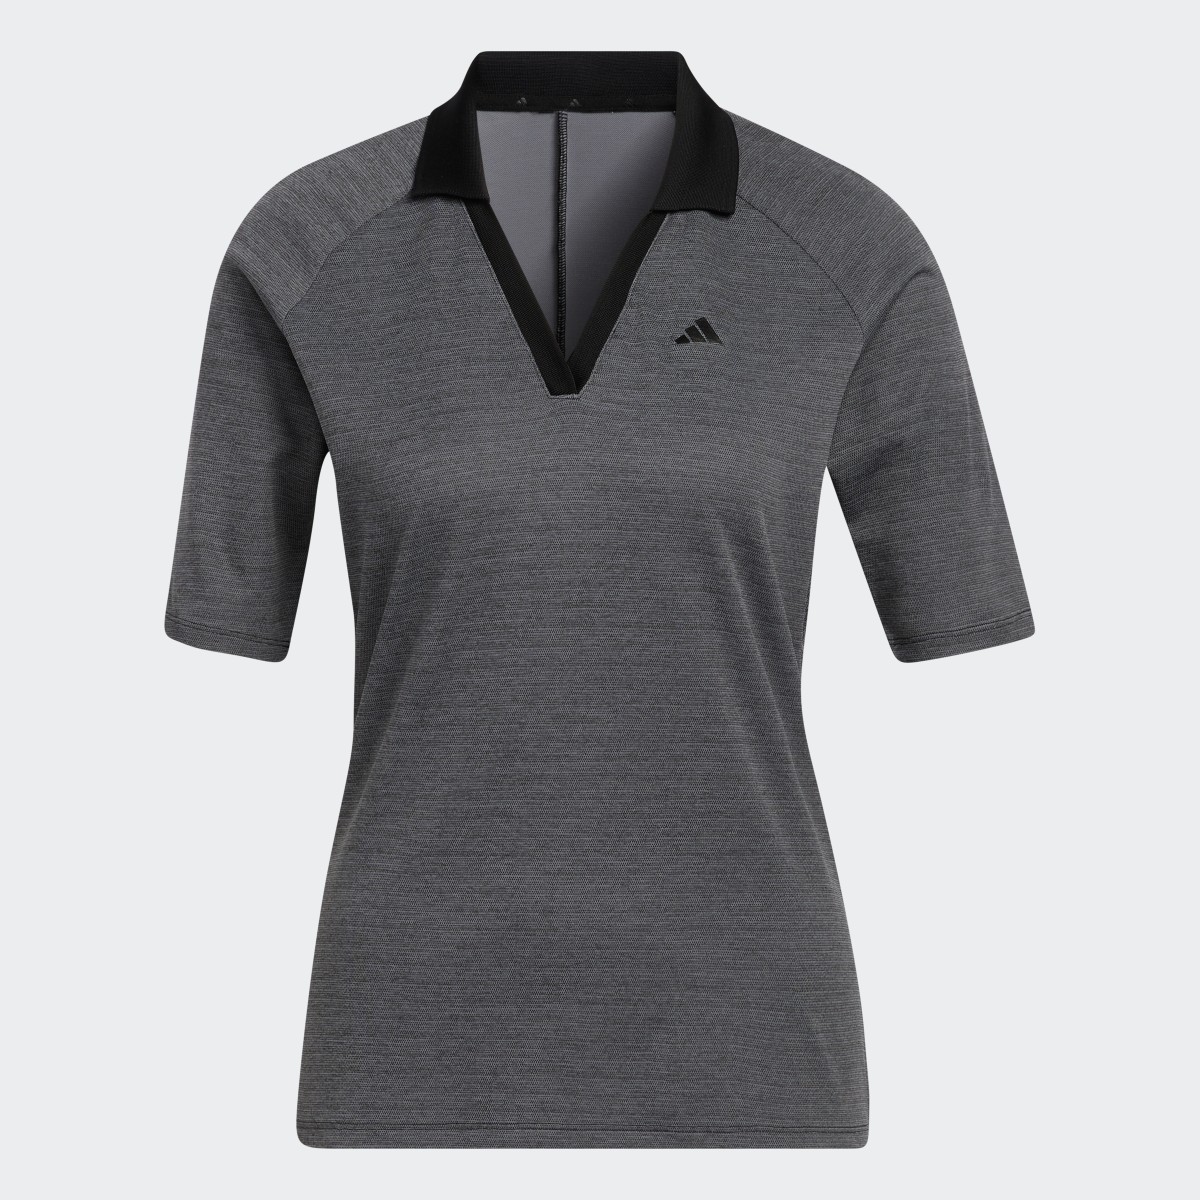 Adidas Ultimate365 Tour No-Show Half-Sleeve Golf Polo Shirt. 9